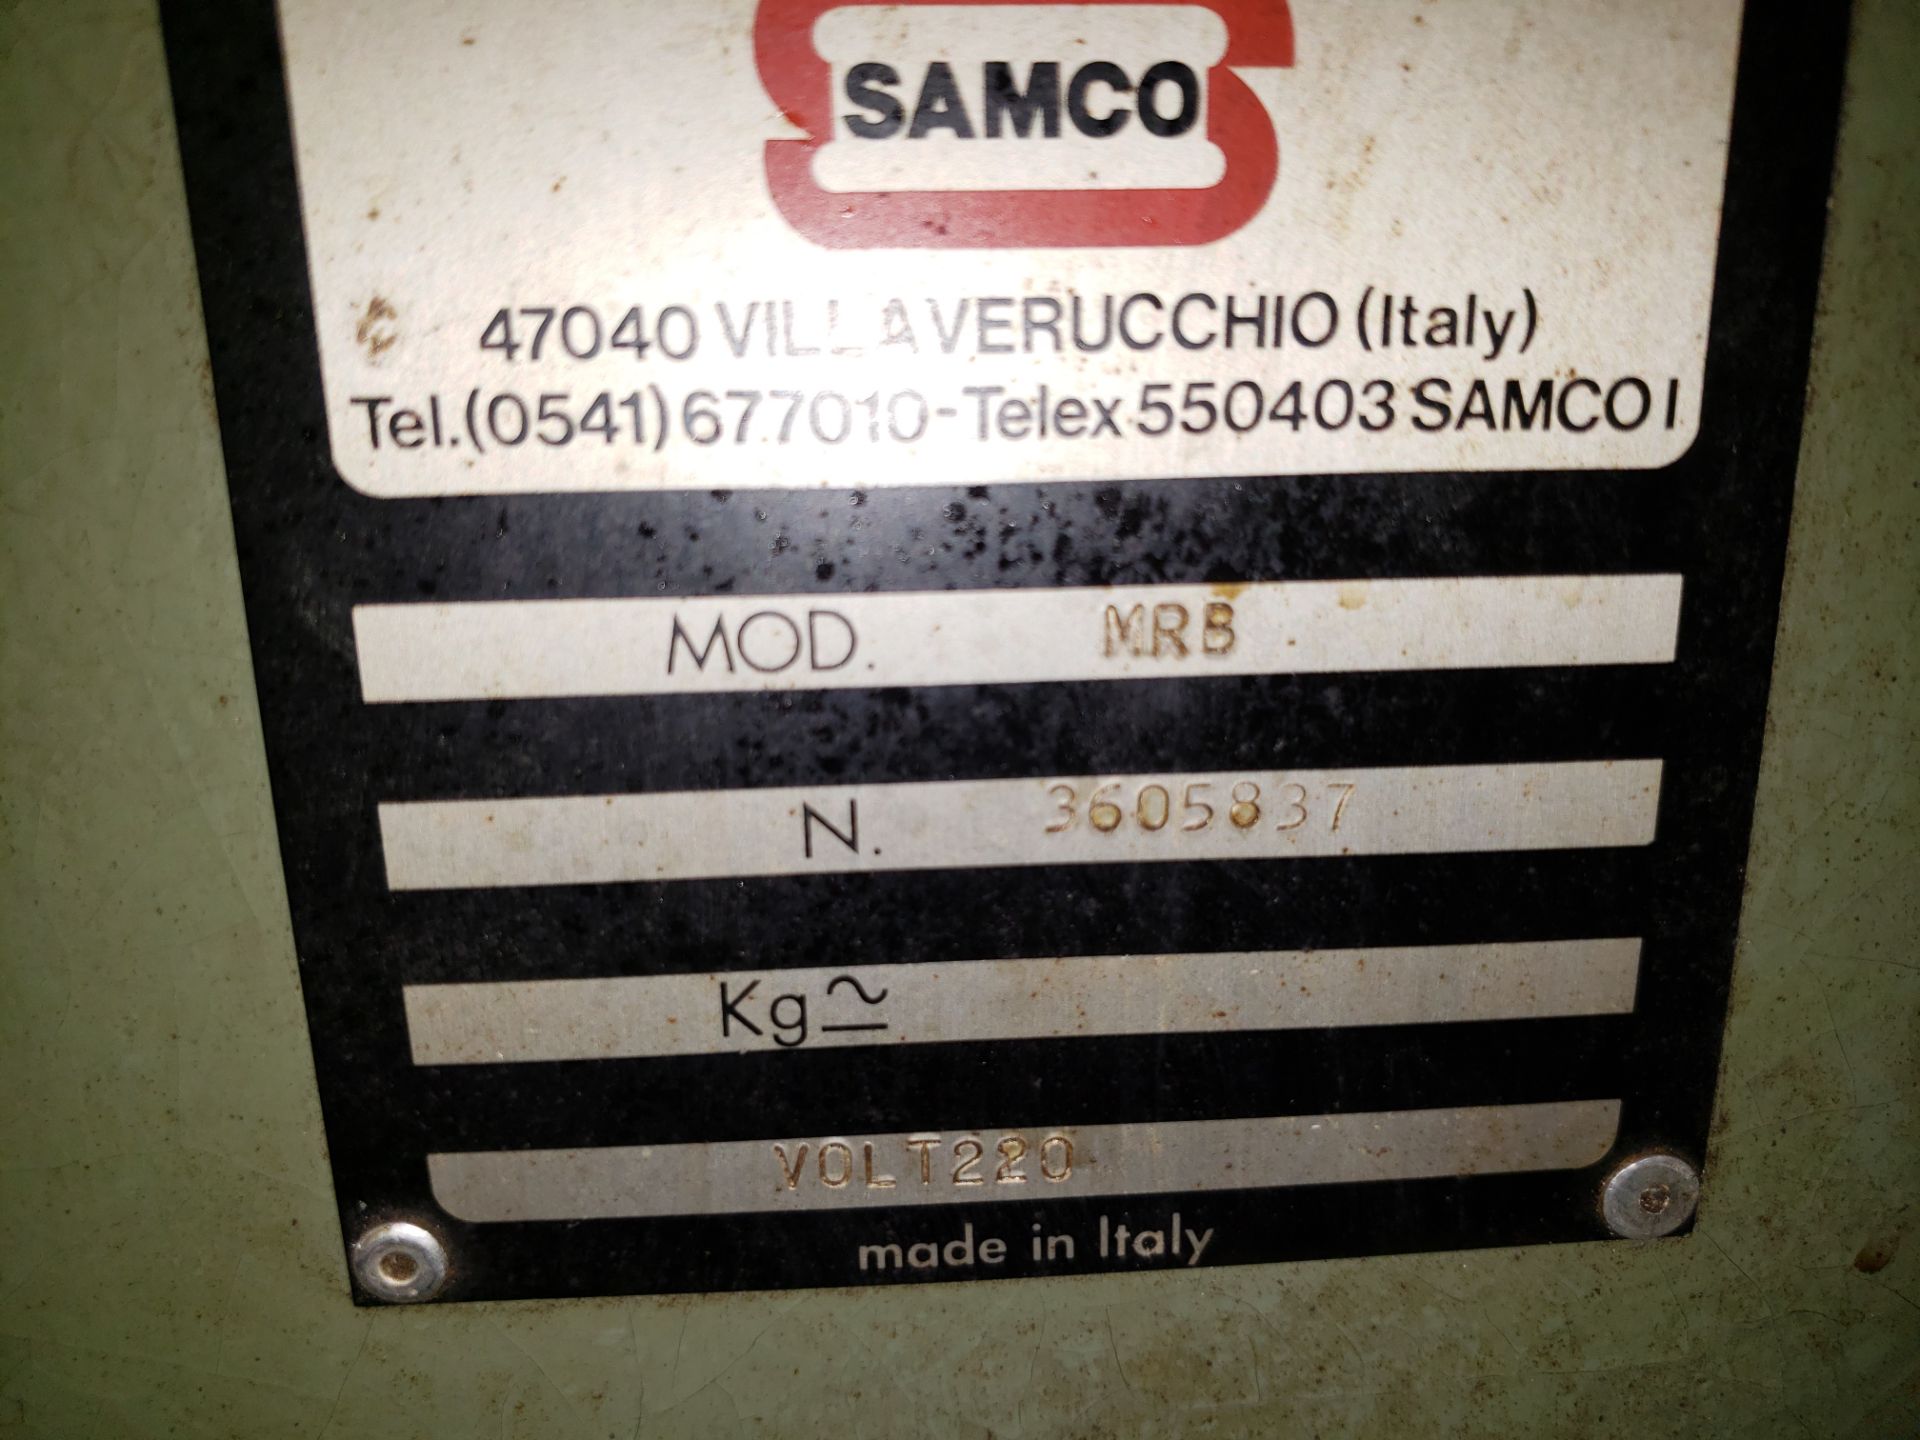 SAMCO PIN ROUTER MODEL-MRB S#3605837 2HP 220V/SINGLE PHASE - Image 4 of 4